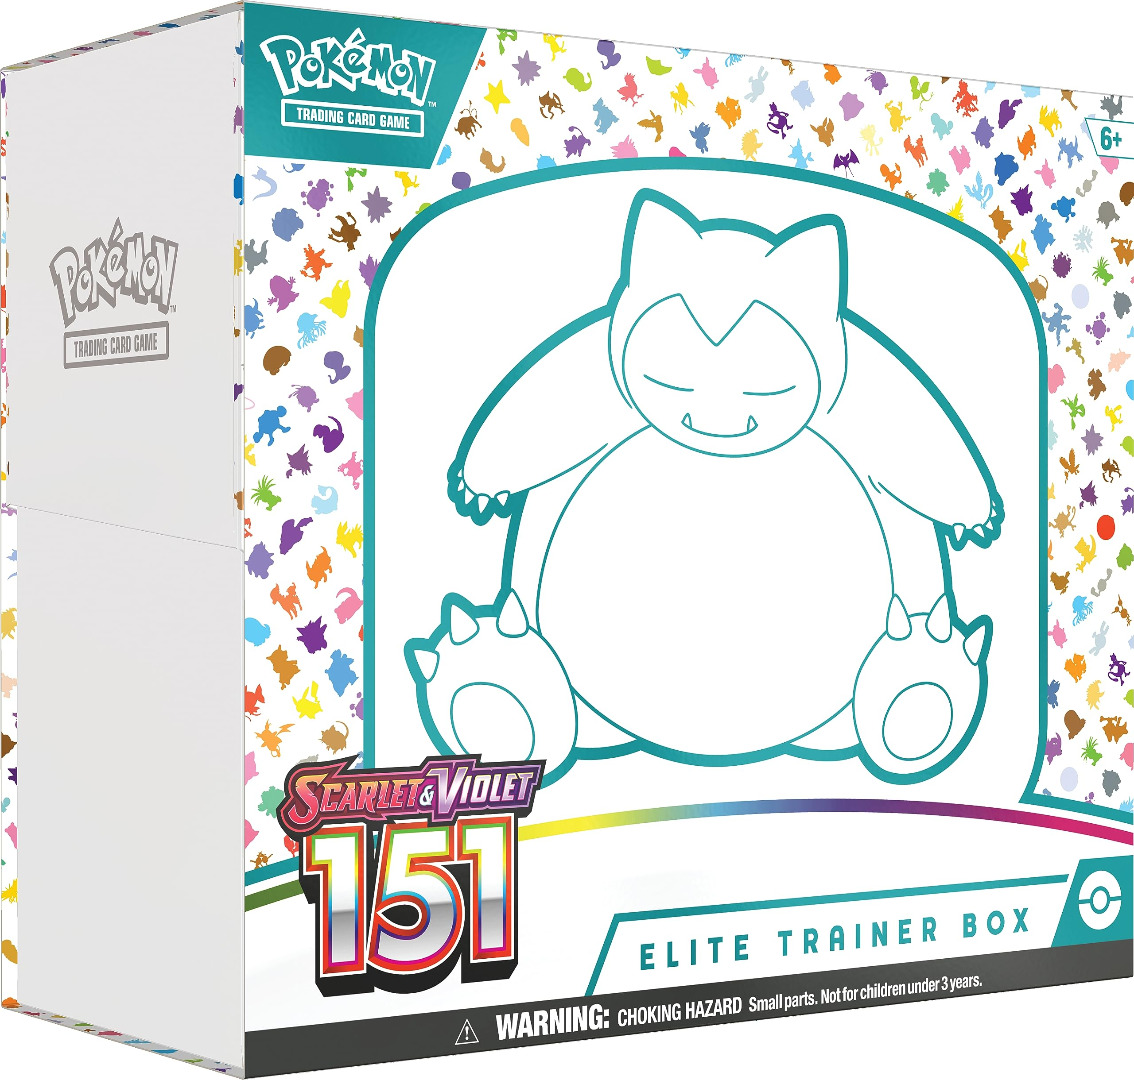 Pokémon - Scarlet & Violet 3.5: 151 Elite Trainer Box (English)